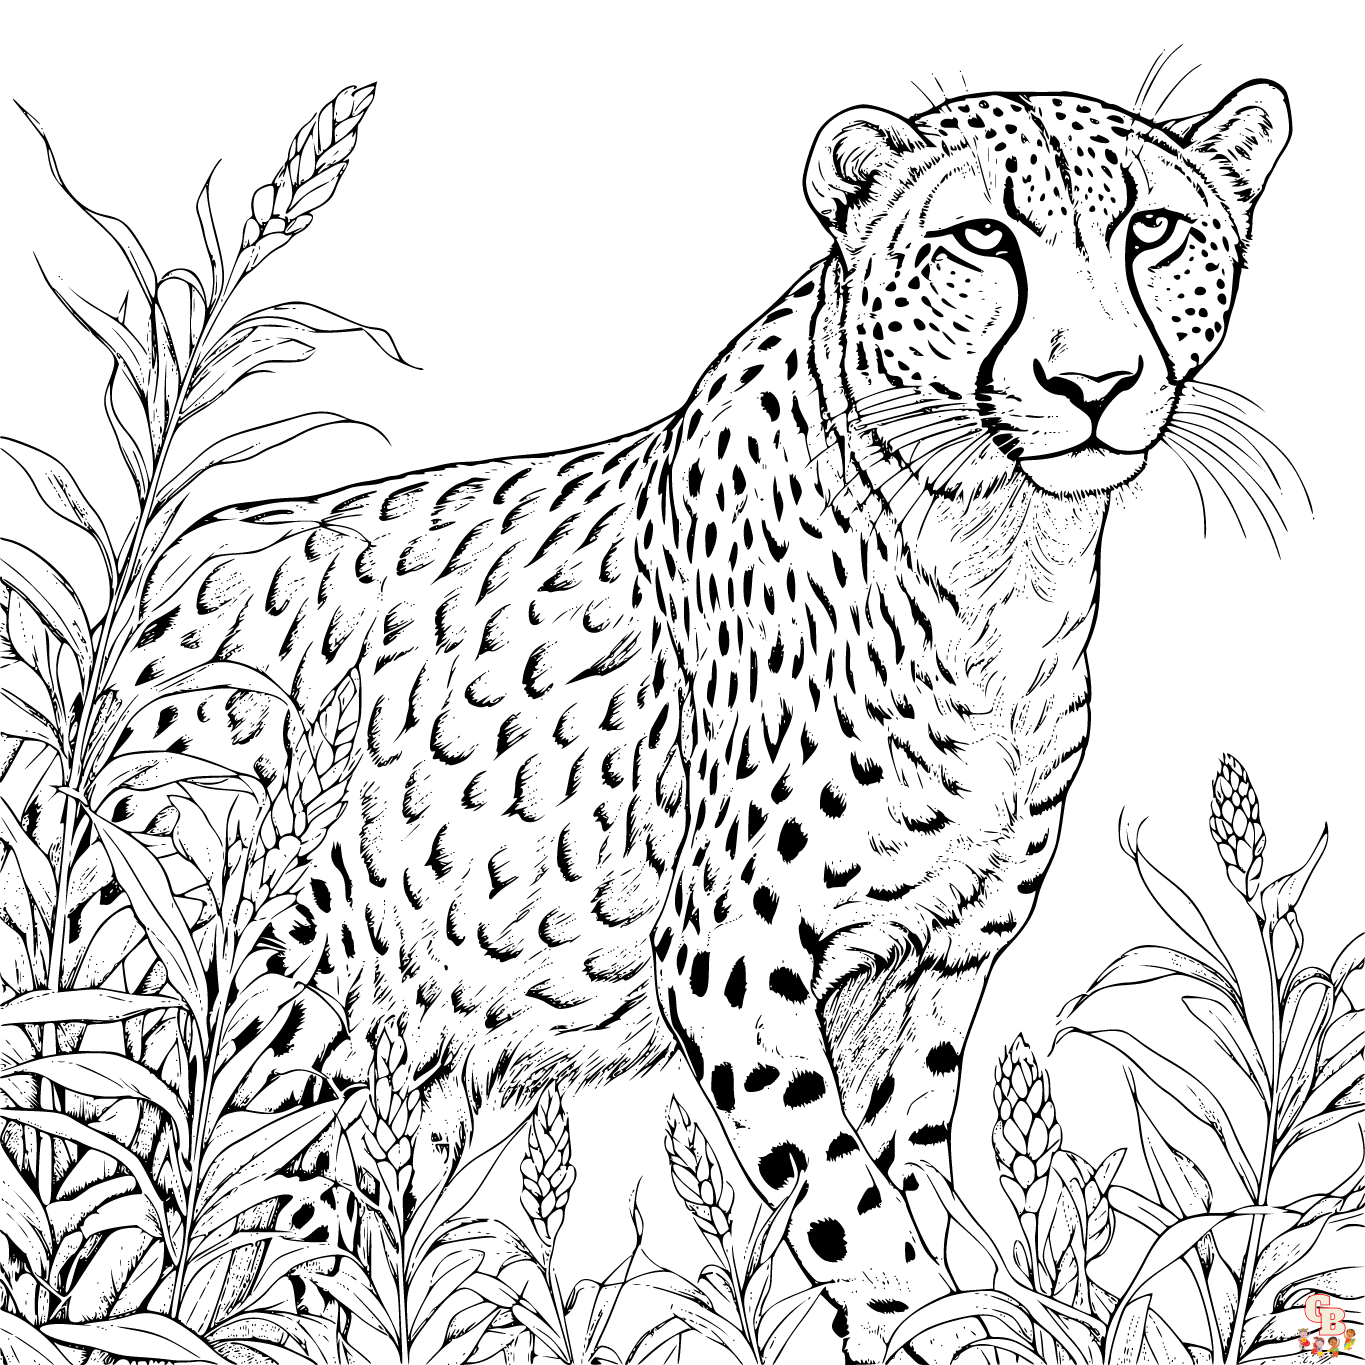 Cheetah coloring pages printable